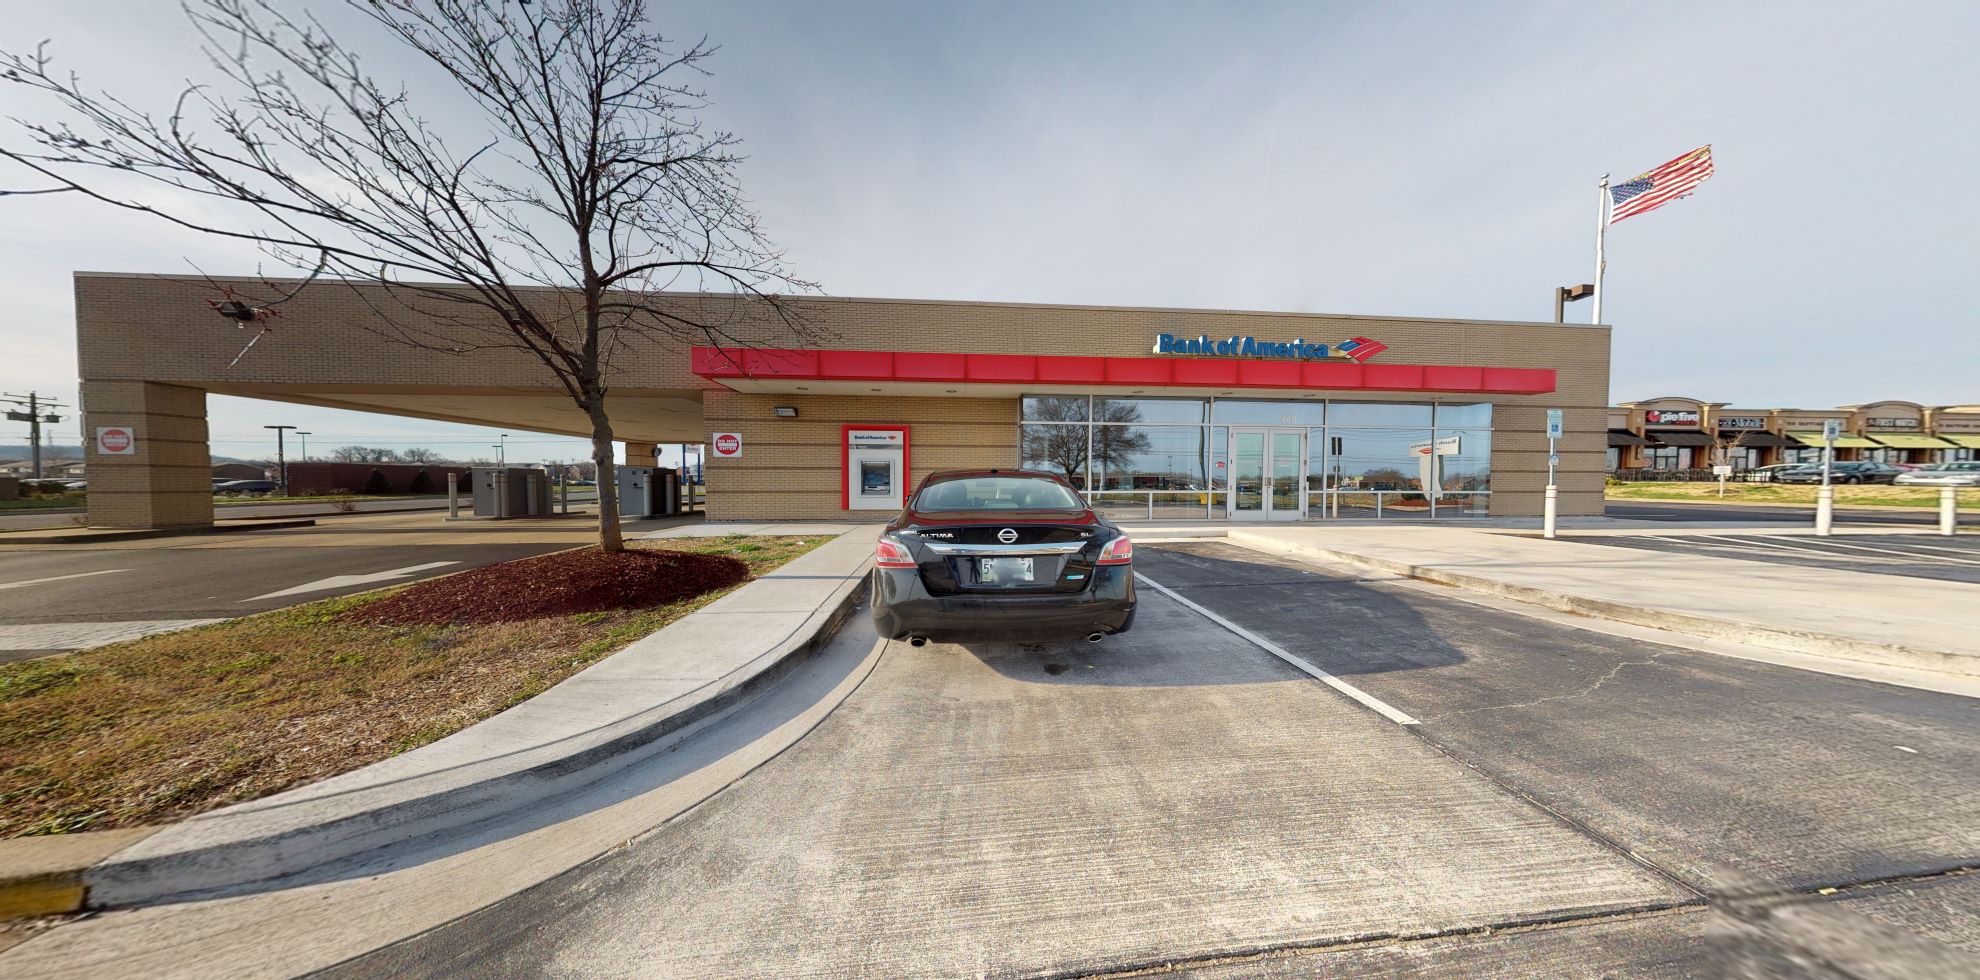 Bank of America financial center with drive-thru ATM | 460 Sam Ridley Pkwy W, Smyrna, TN 37167